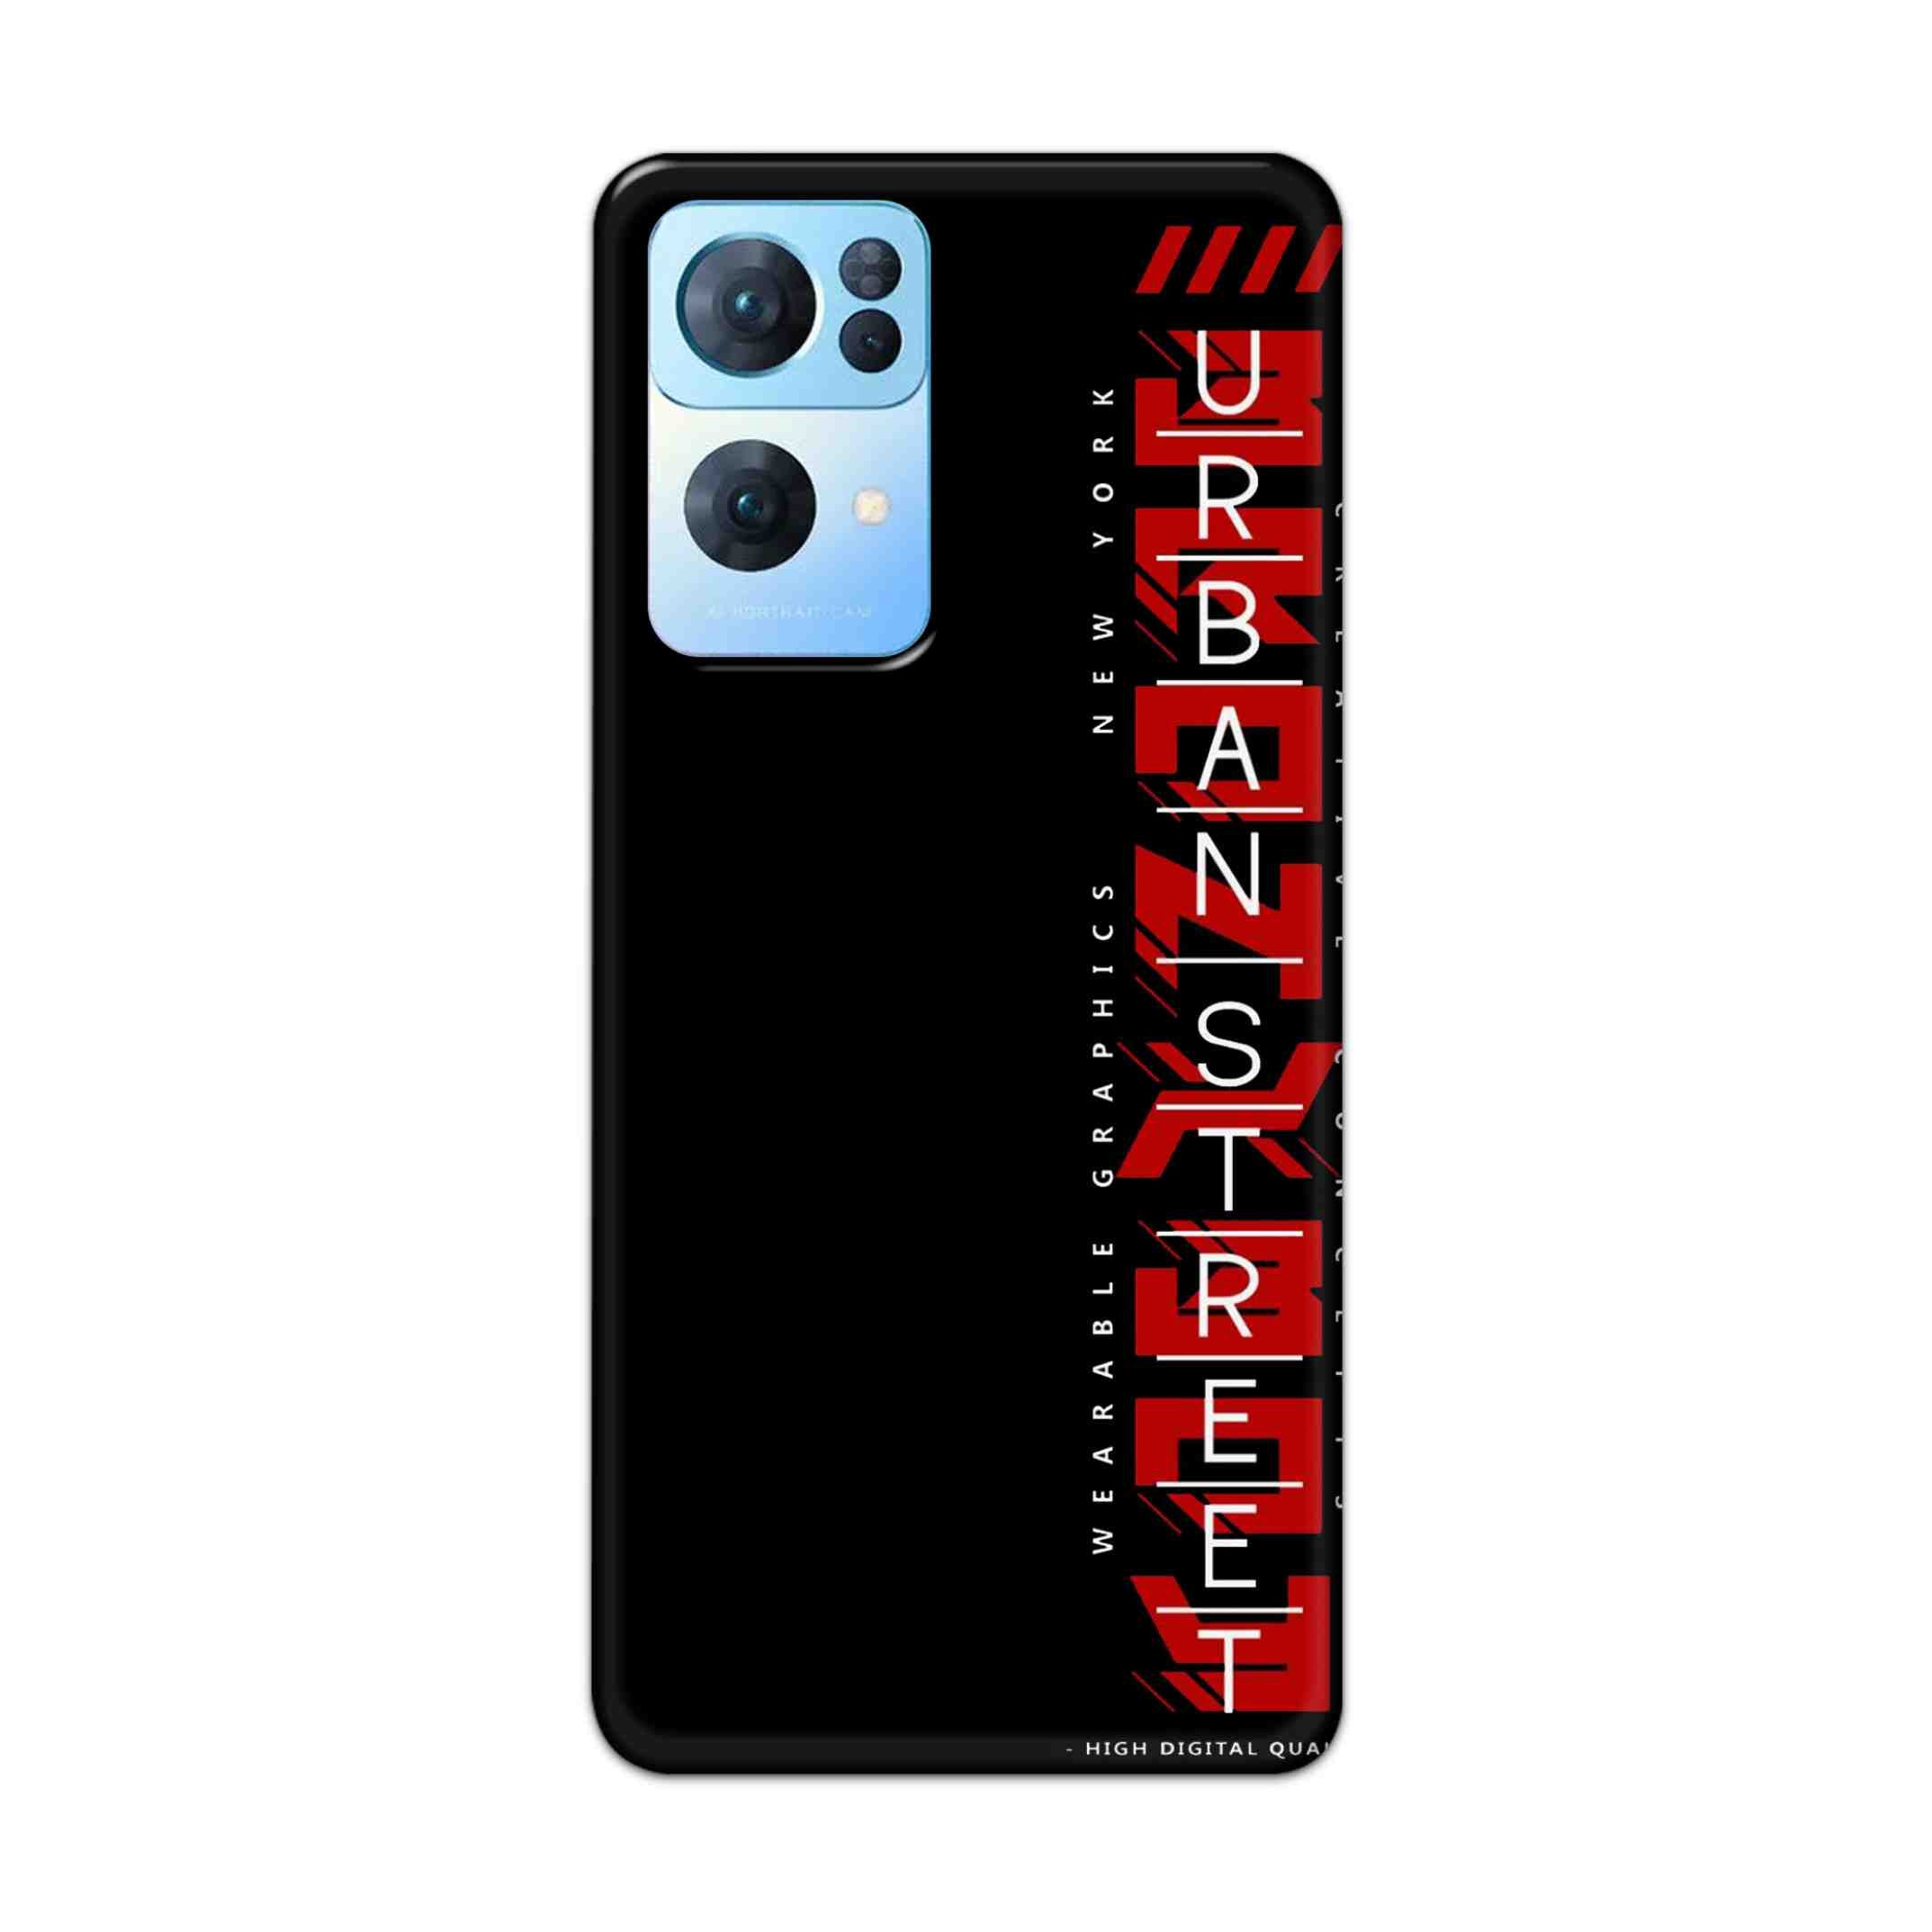 Buy Urban Street Hard Back Mobile Phone Case Cover For Oppo Reno 7 Pro Online